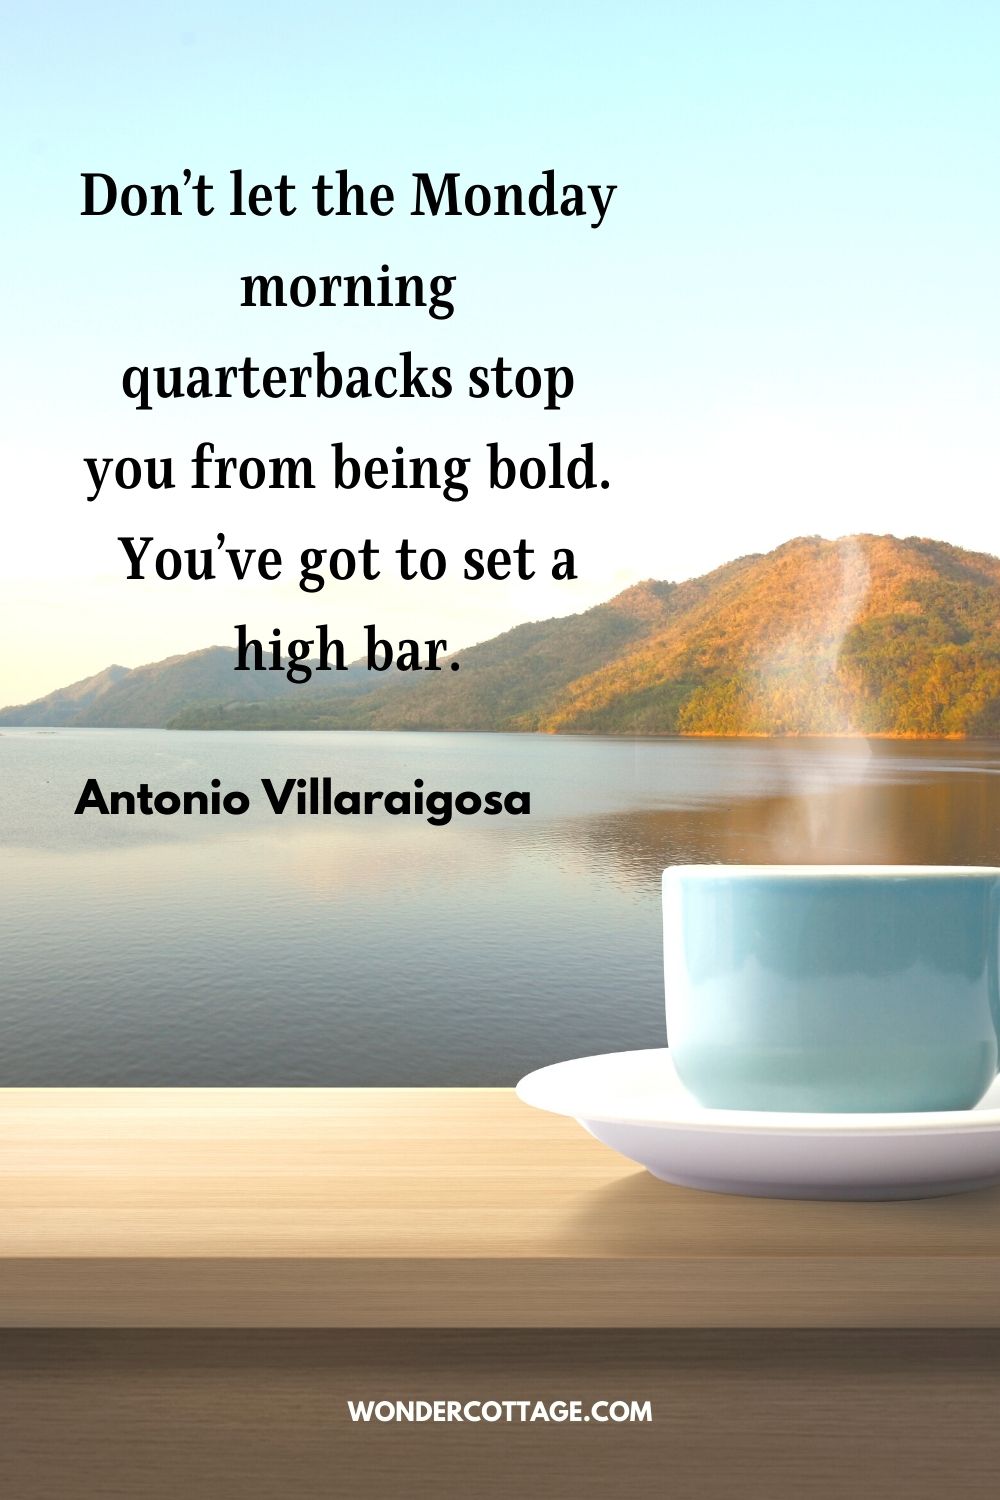 Don’t let the Monday morning quarterbacks stop you from being bold. You’ve got to set a high bar.” Antonio Villaraigosa